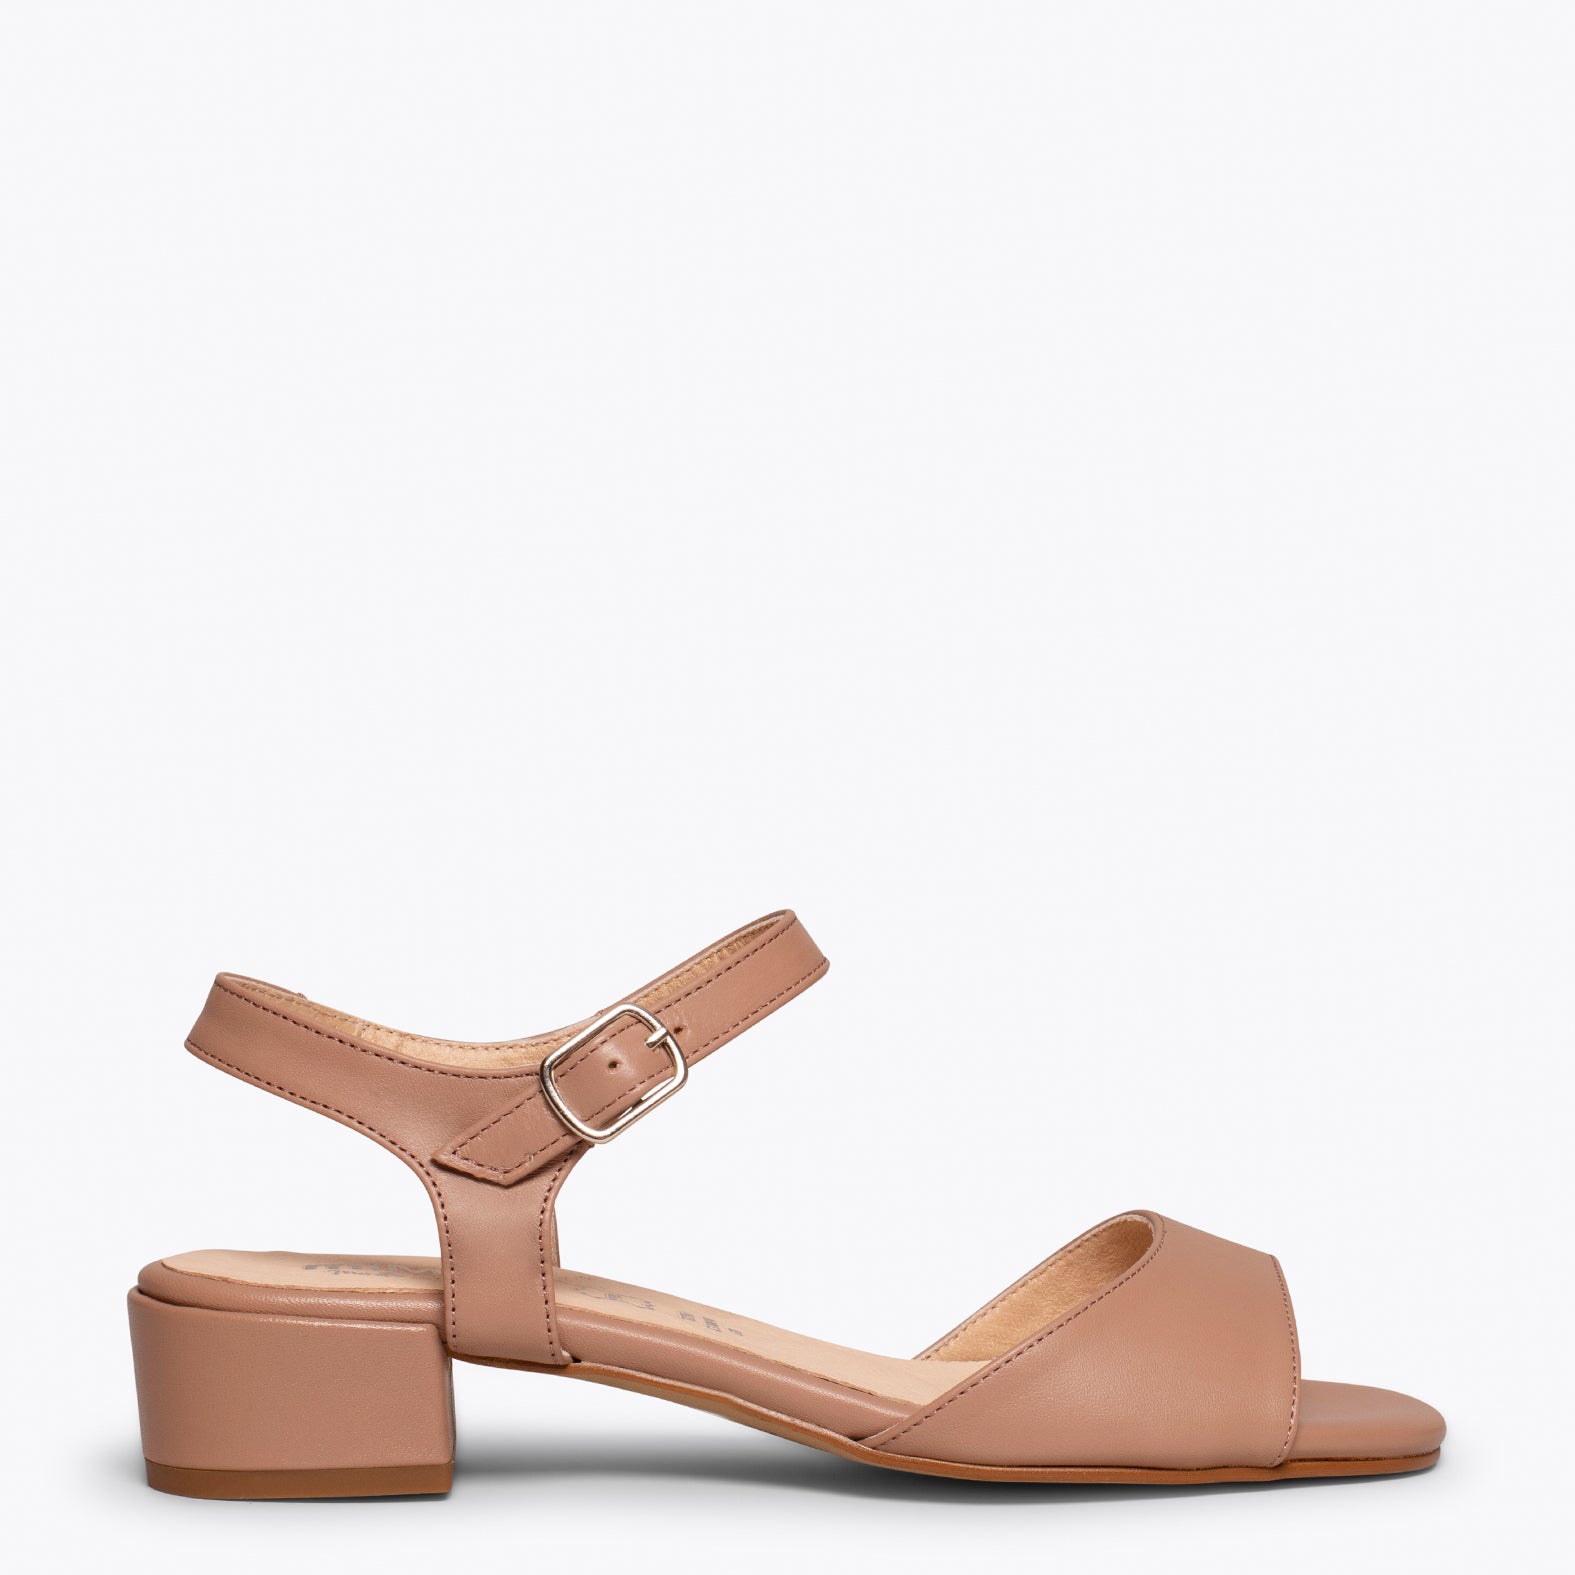 SEA – NUDE low heel sandal